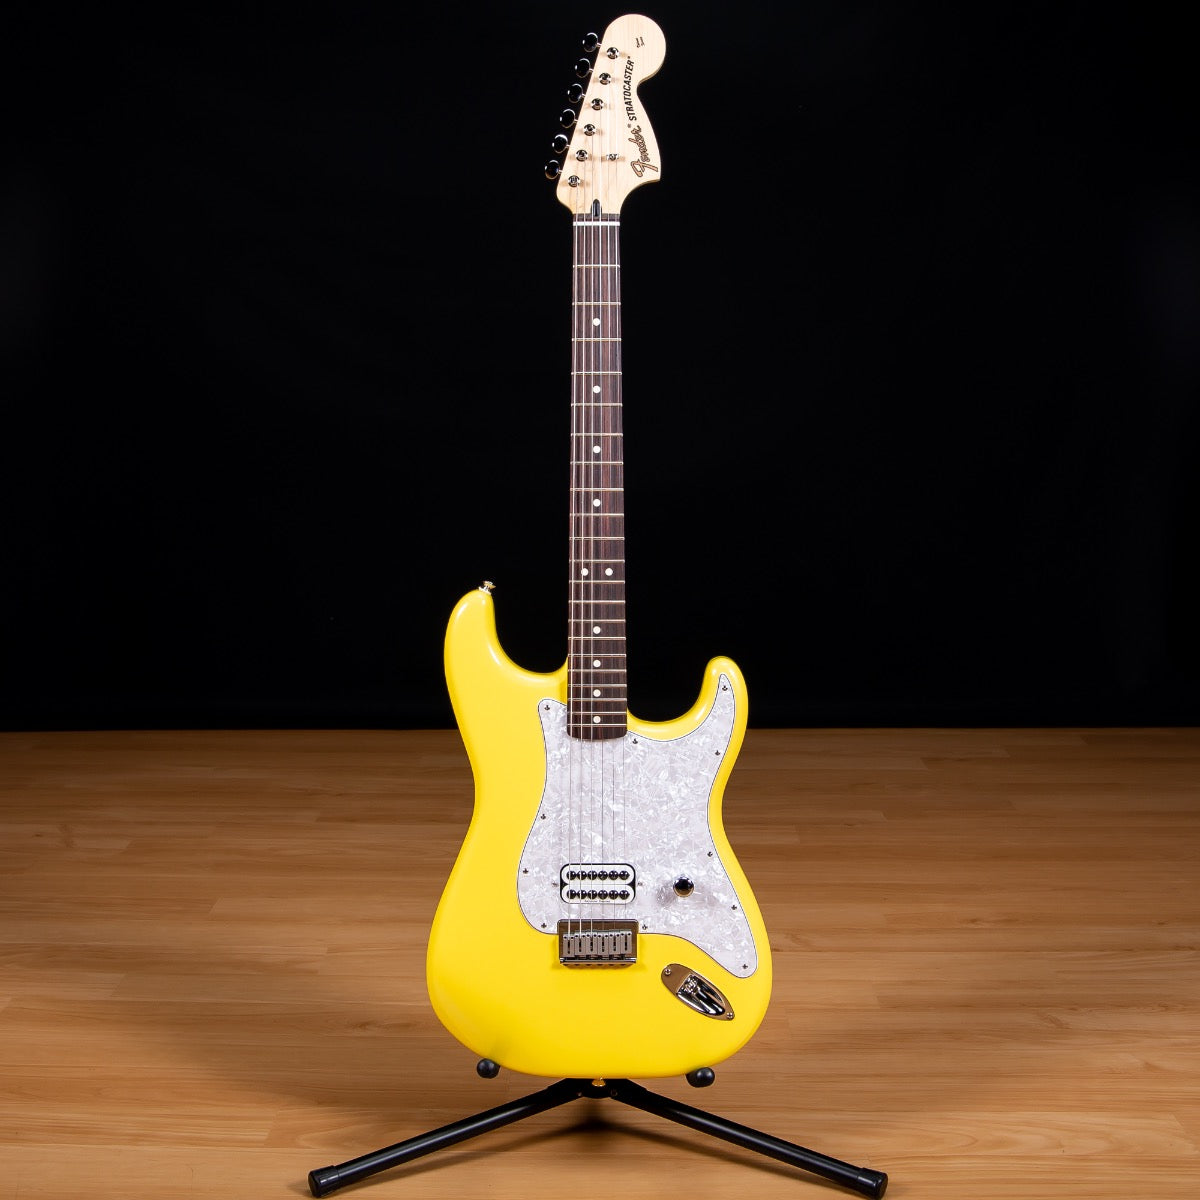 Fender Limited Edition Tom Delonge Stratocaster - Graffiti Yellow, View 2